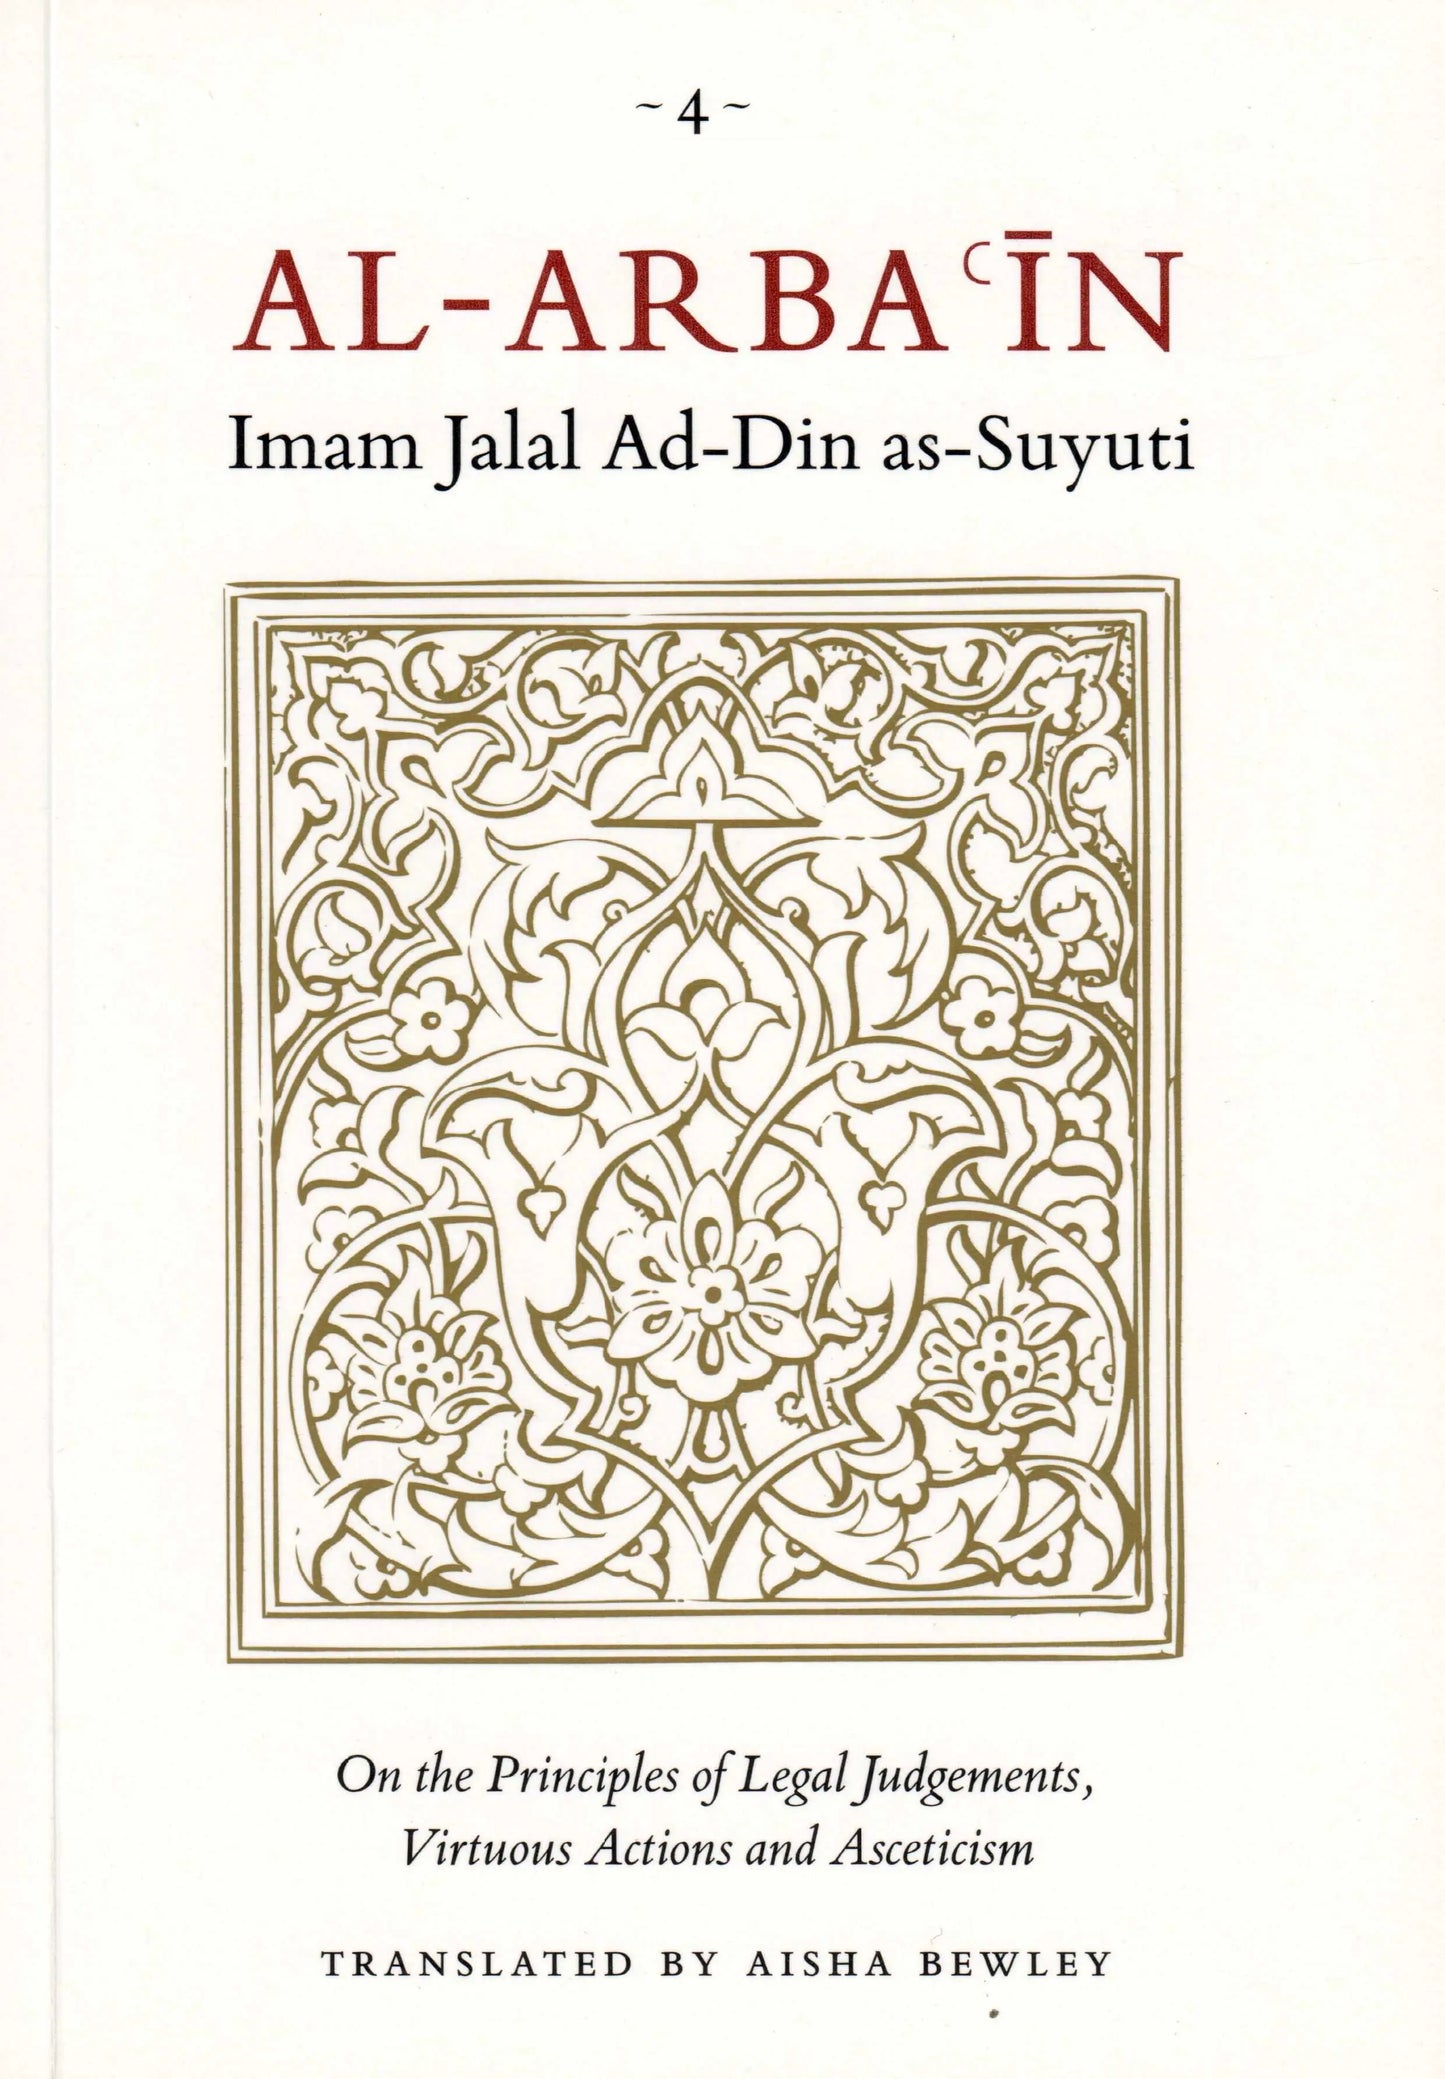 Al-Arba'in (4) of Imam Jalal ad-Din as-Suyuti